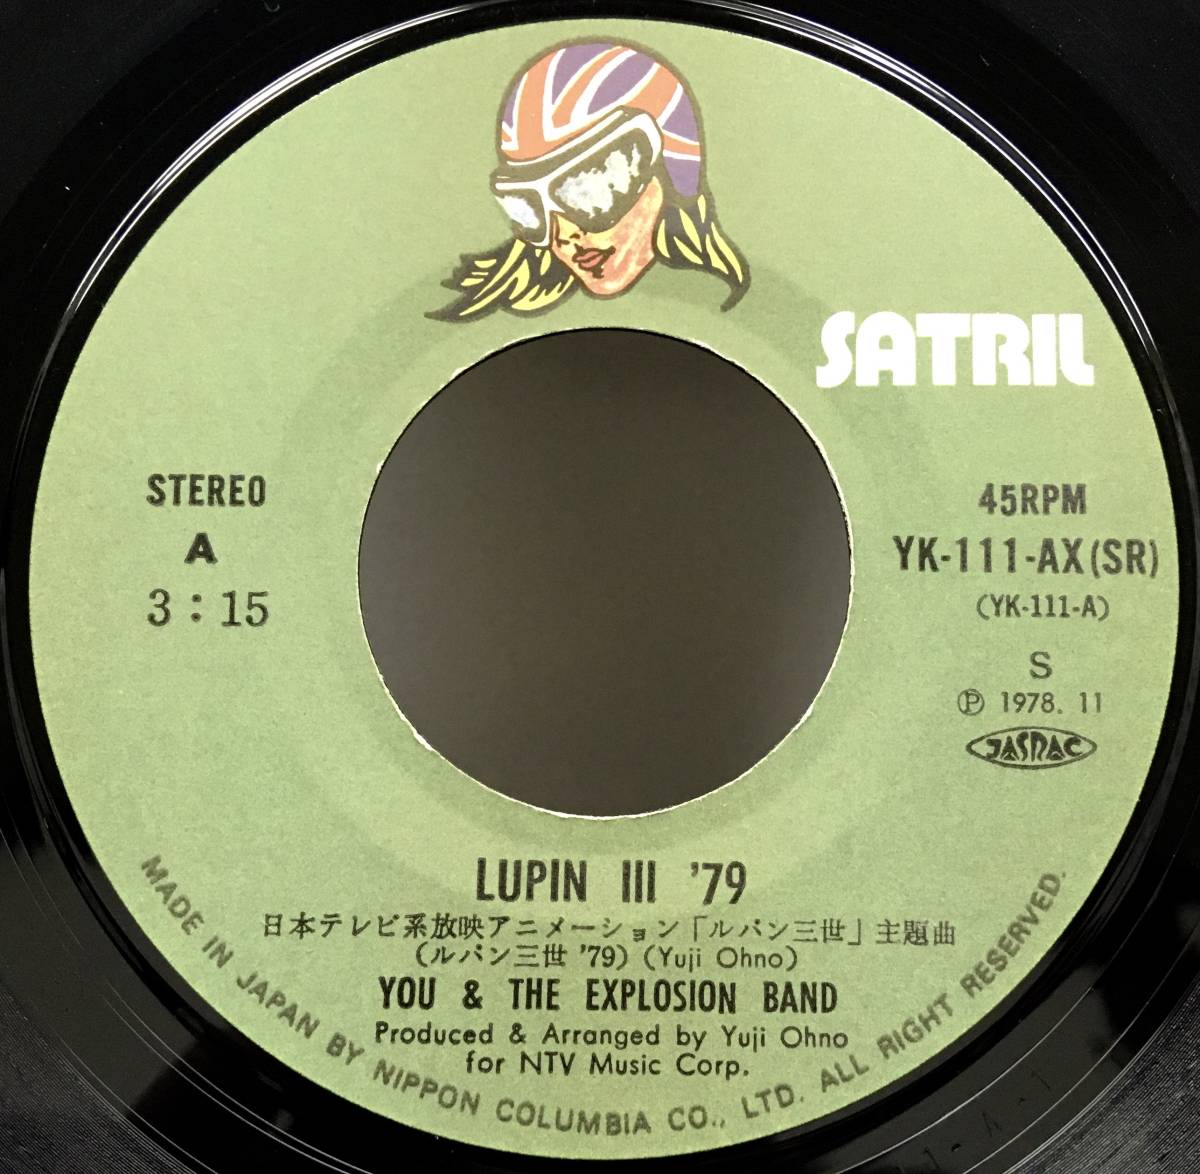 EP[ Lupin III \'79/lavu*s call ] You &eksp low John * частота ( Oono самец 2 Sandra звуковой сигнал мир моно Lupin the 3rd Yuji Ohno)